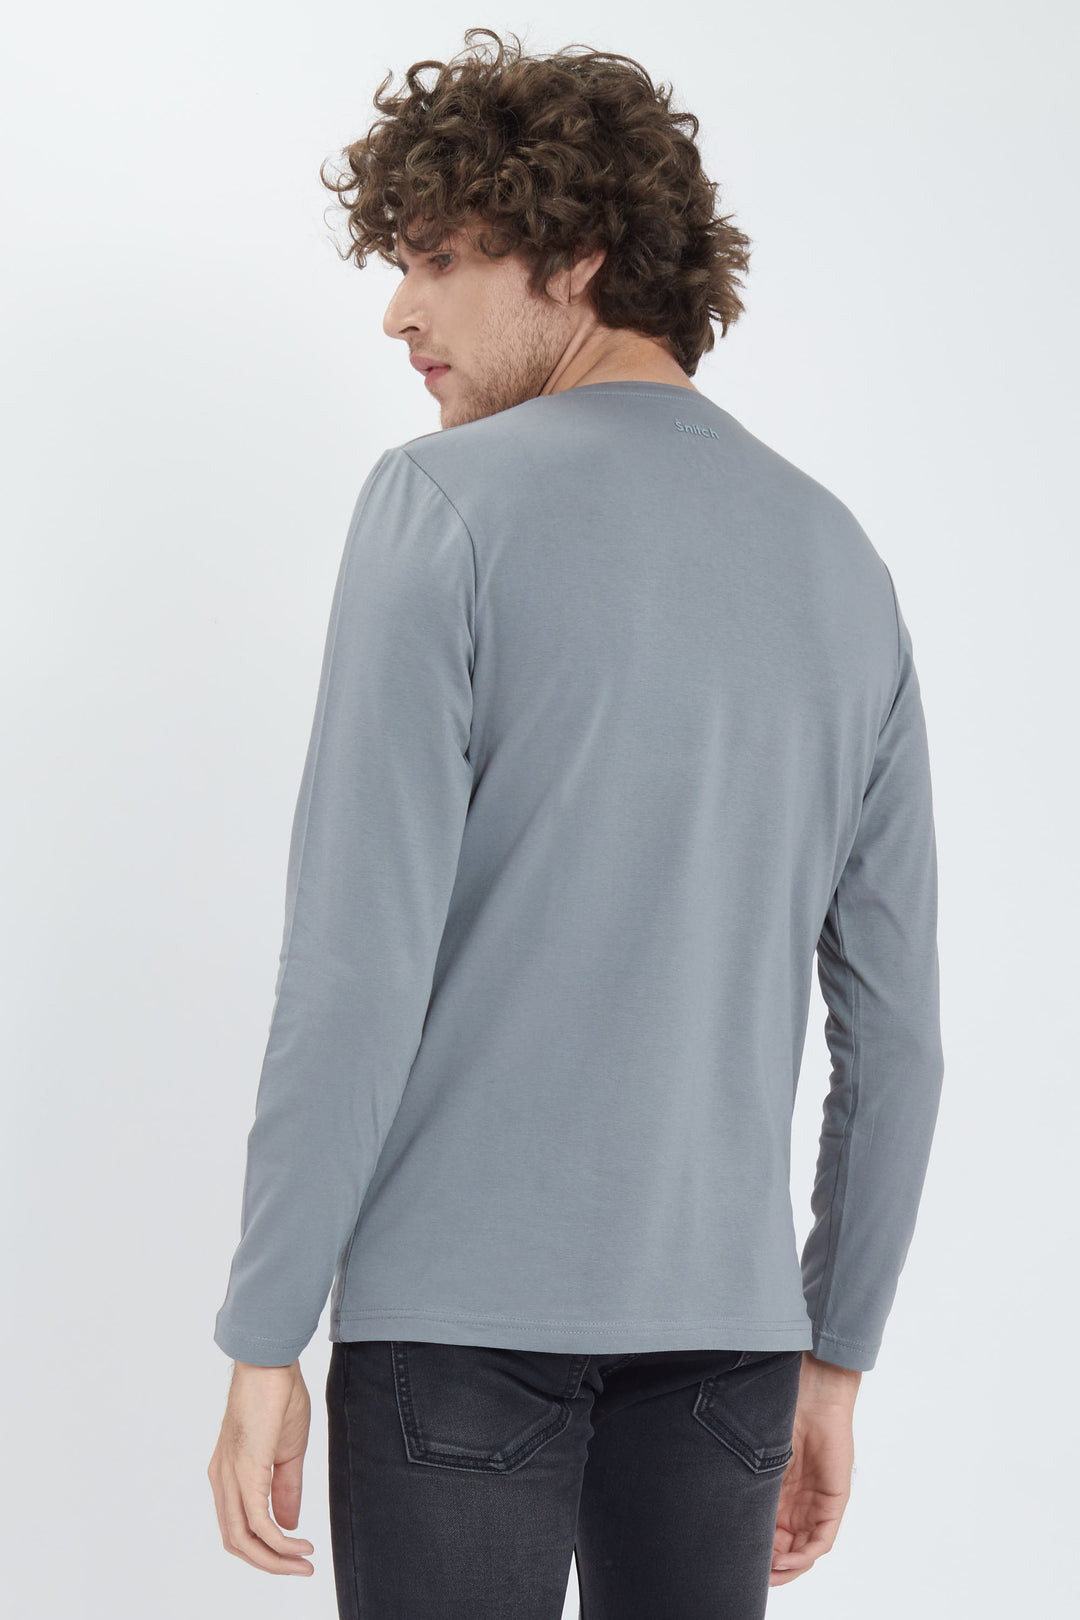 Grey Full Sleeves 4-way Stretch Crew Neck T-Shirt - SNITCH